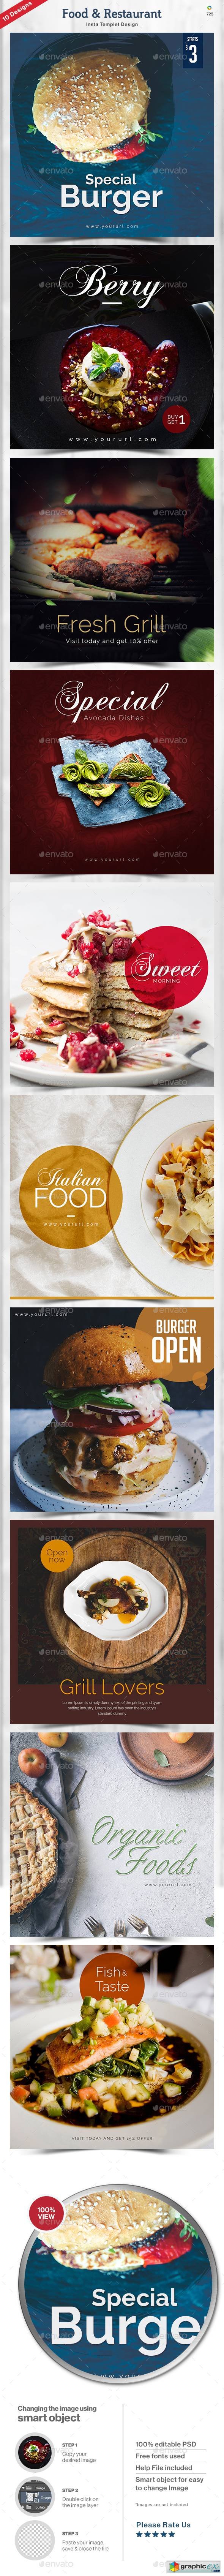 Food & Restaurant Instagram Templates - 10 Designs